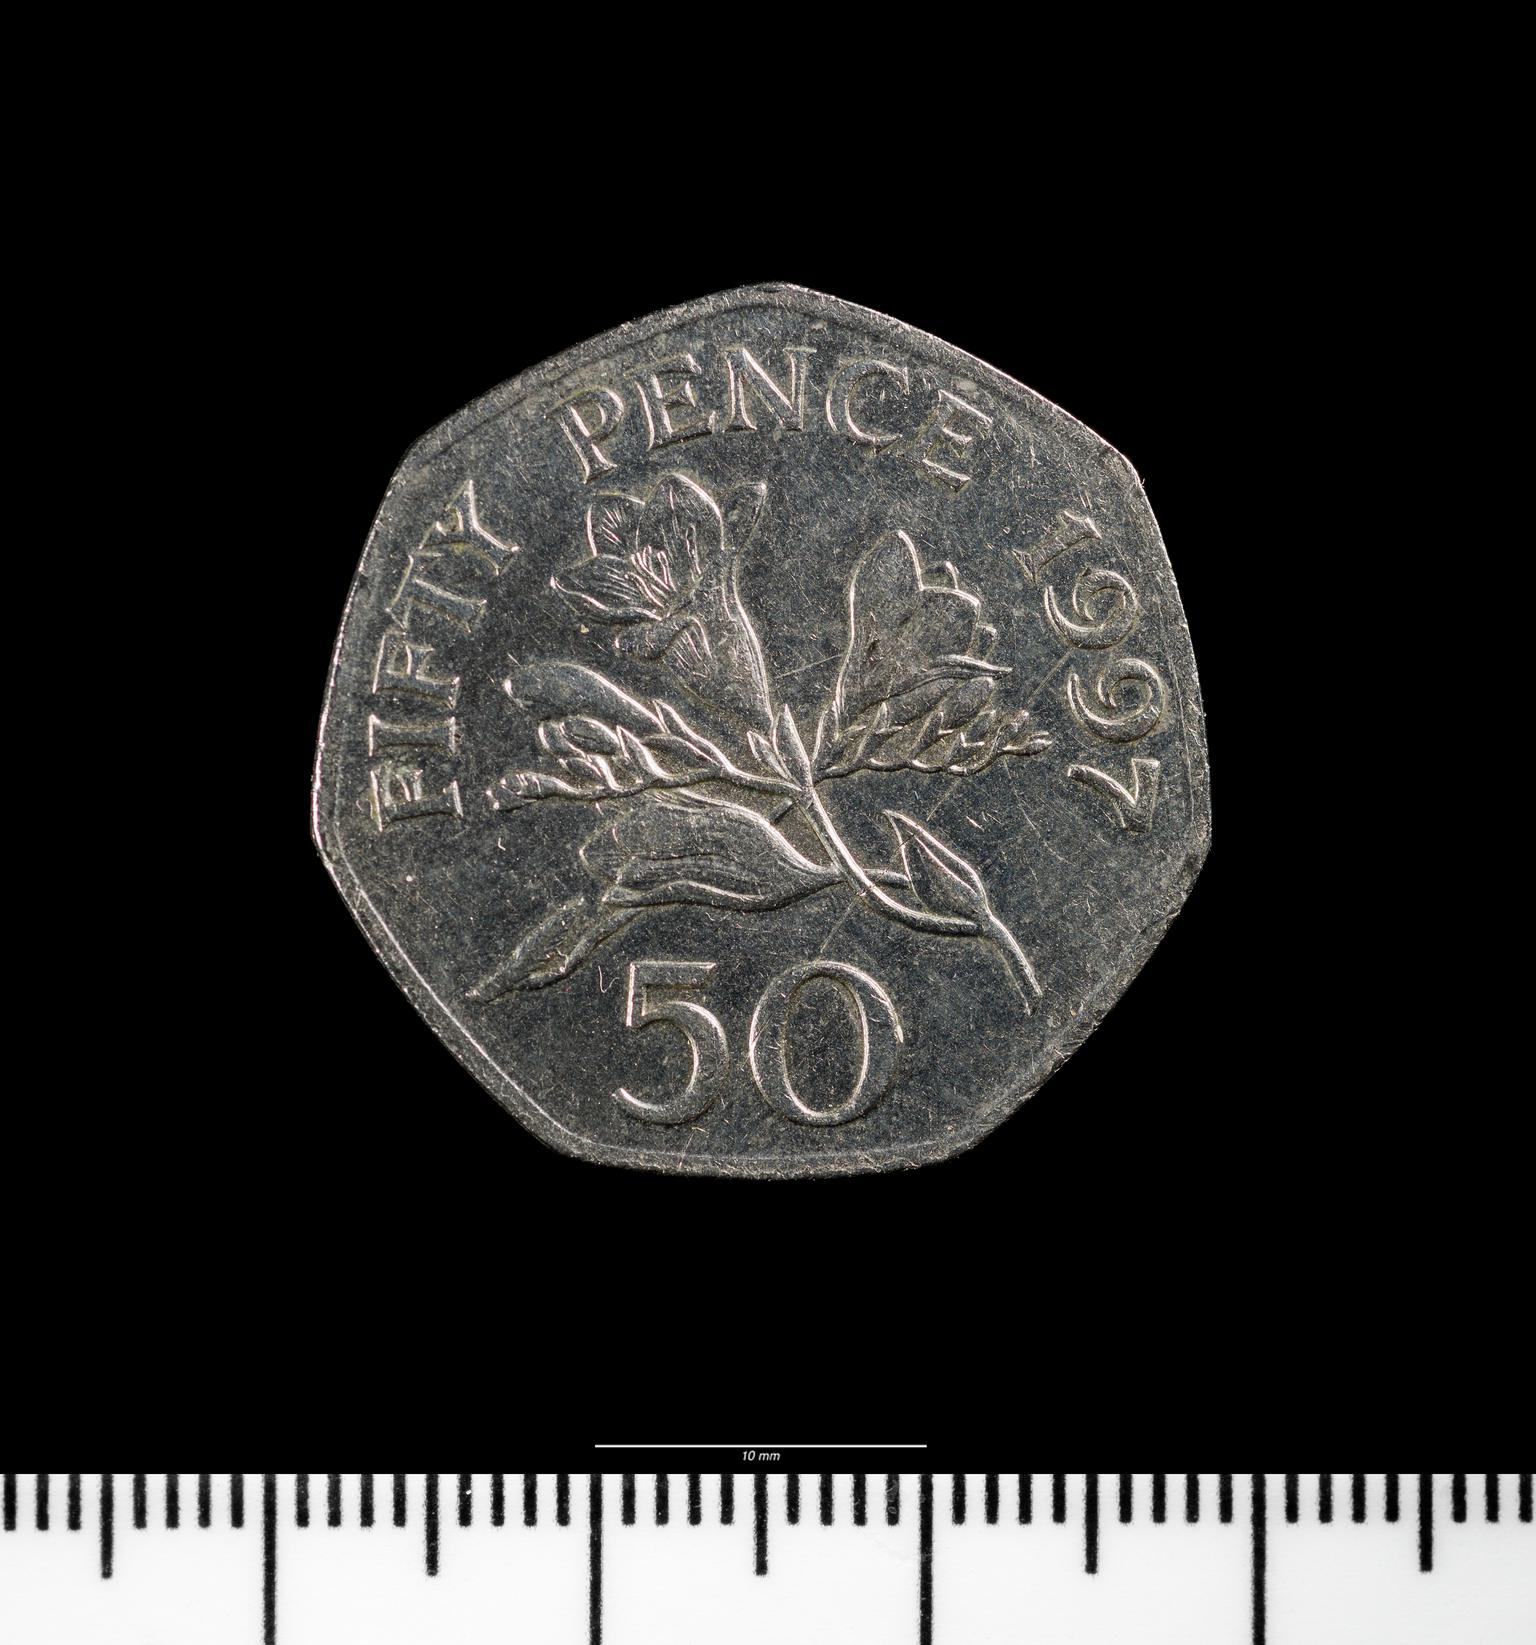 Elizabeth II fifty pence (Guernsey)